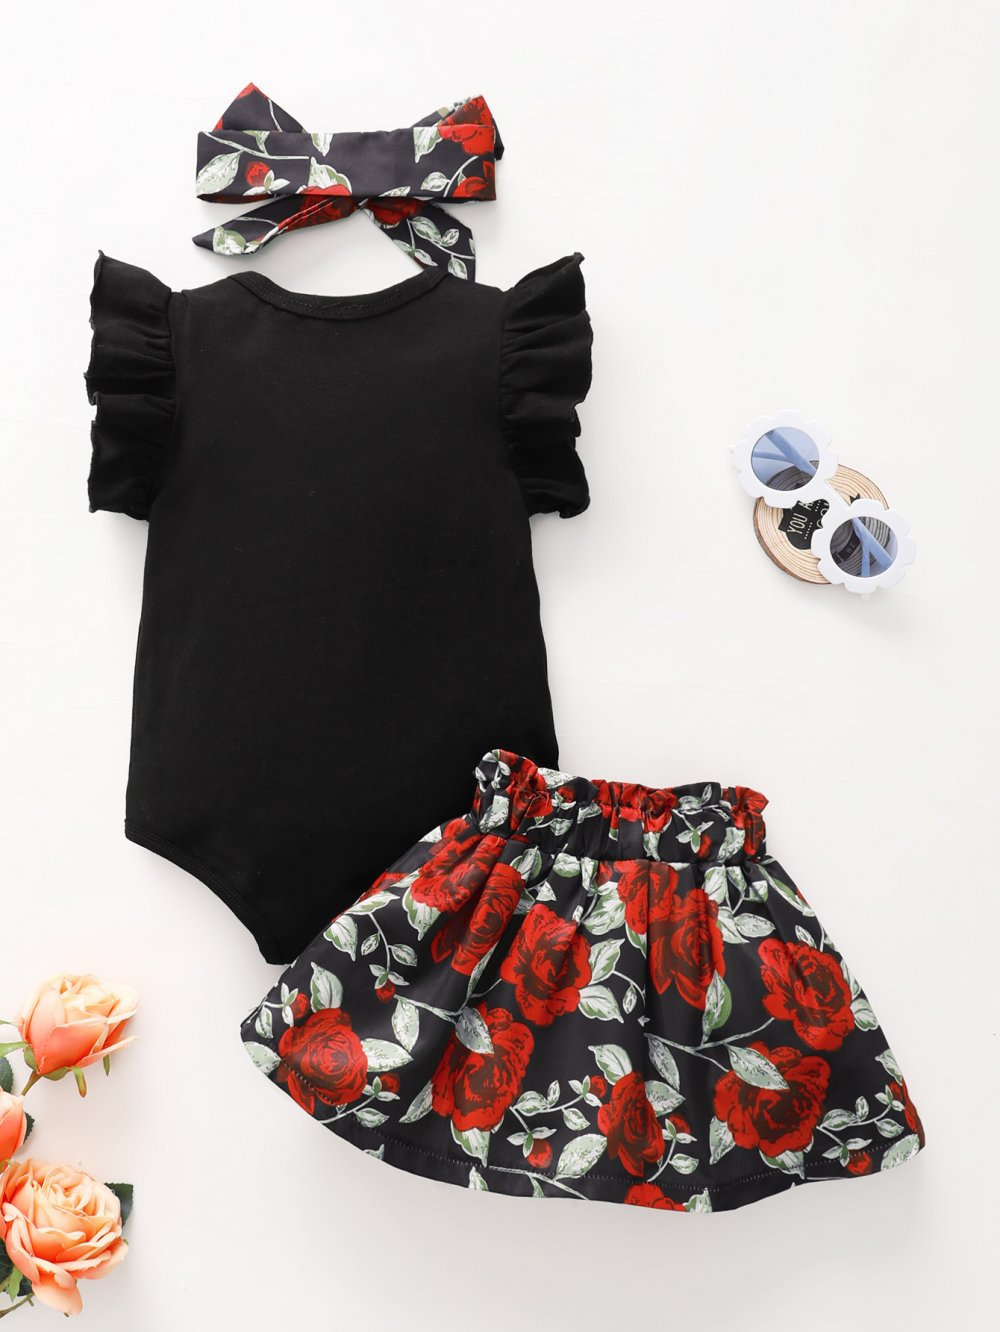 Baby Girls Summer Sleeveless Black Romper And Rose Printed Skirt and Headband Set Baby Clothing In Bulk